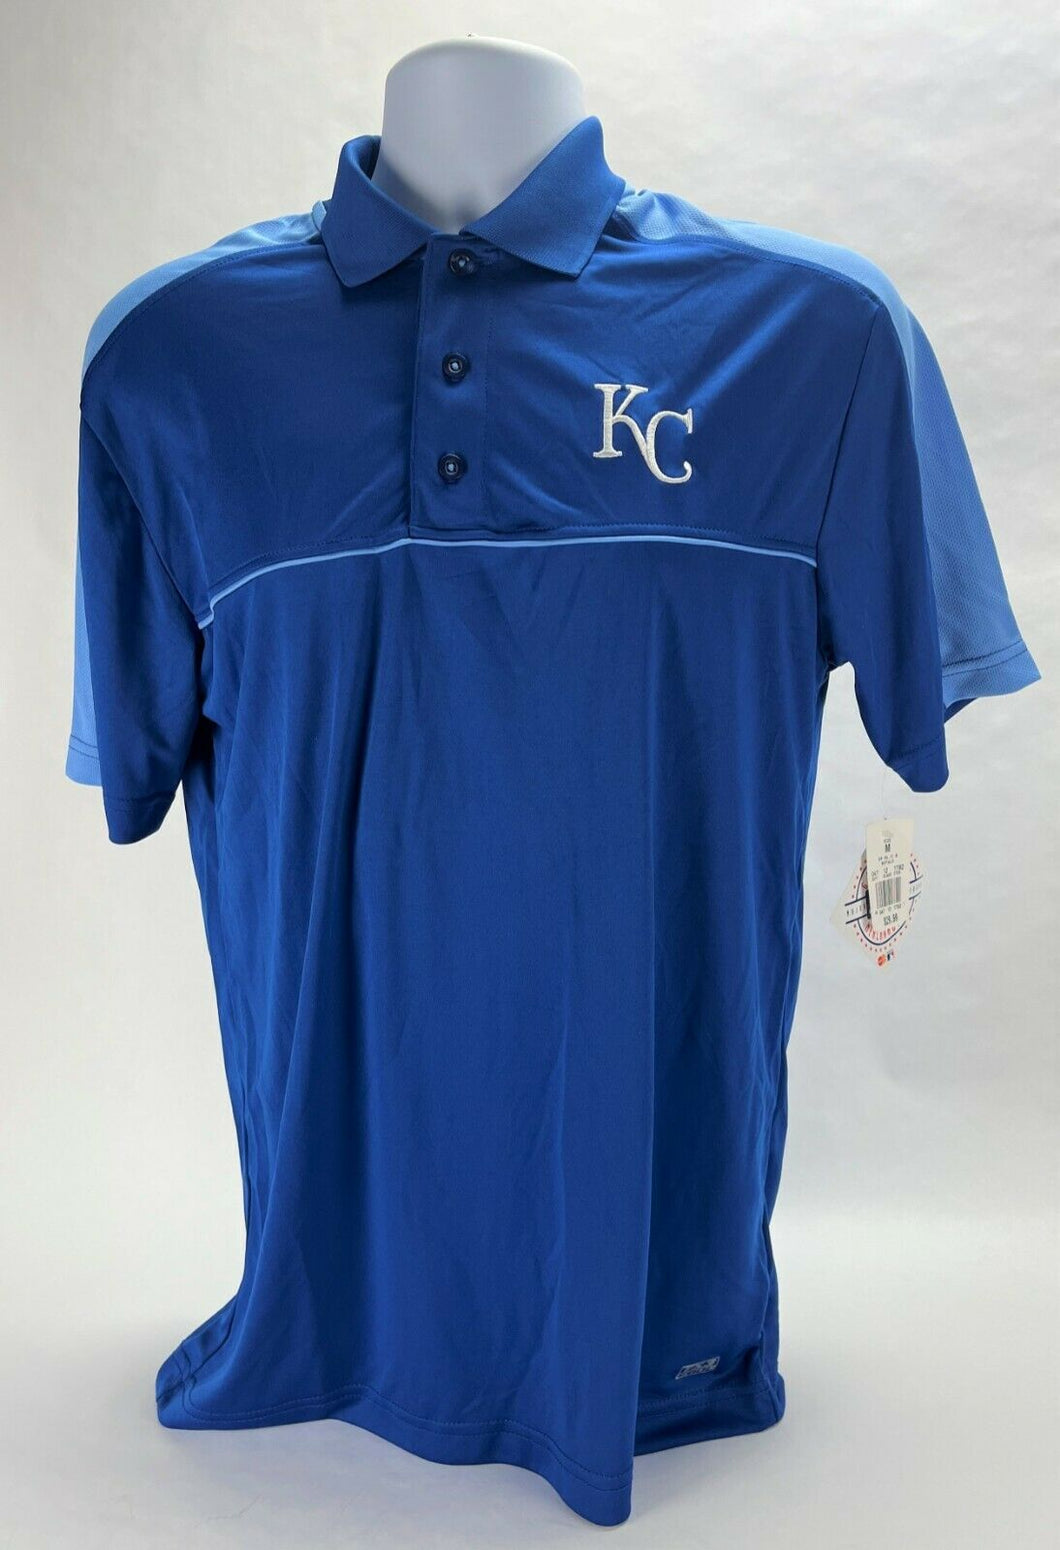 MLB Kansas City Royals Men's Polo with TX3 Cool Fabric, Royal Blue, Small